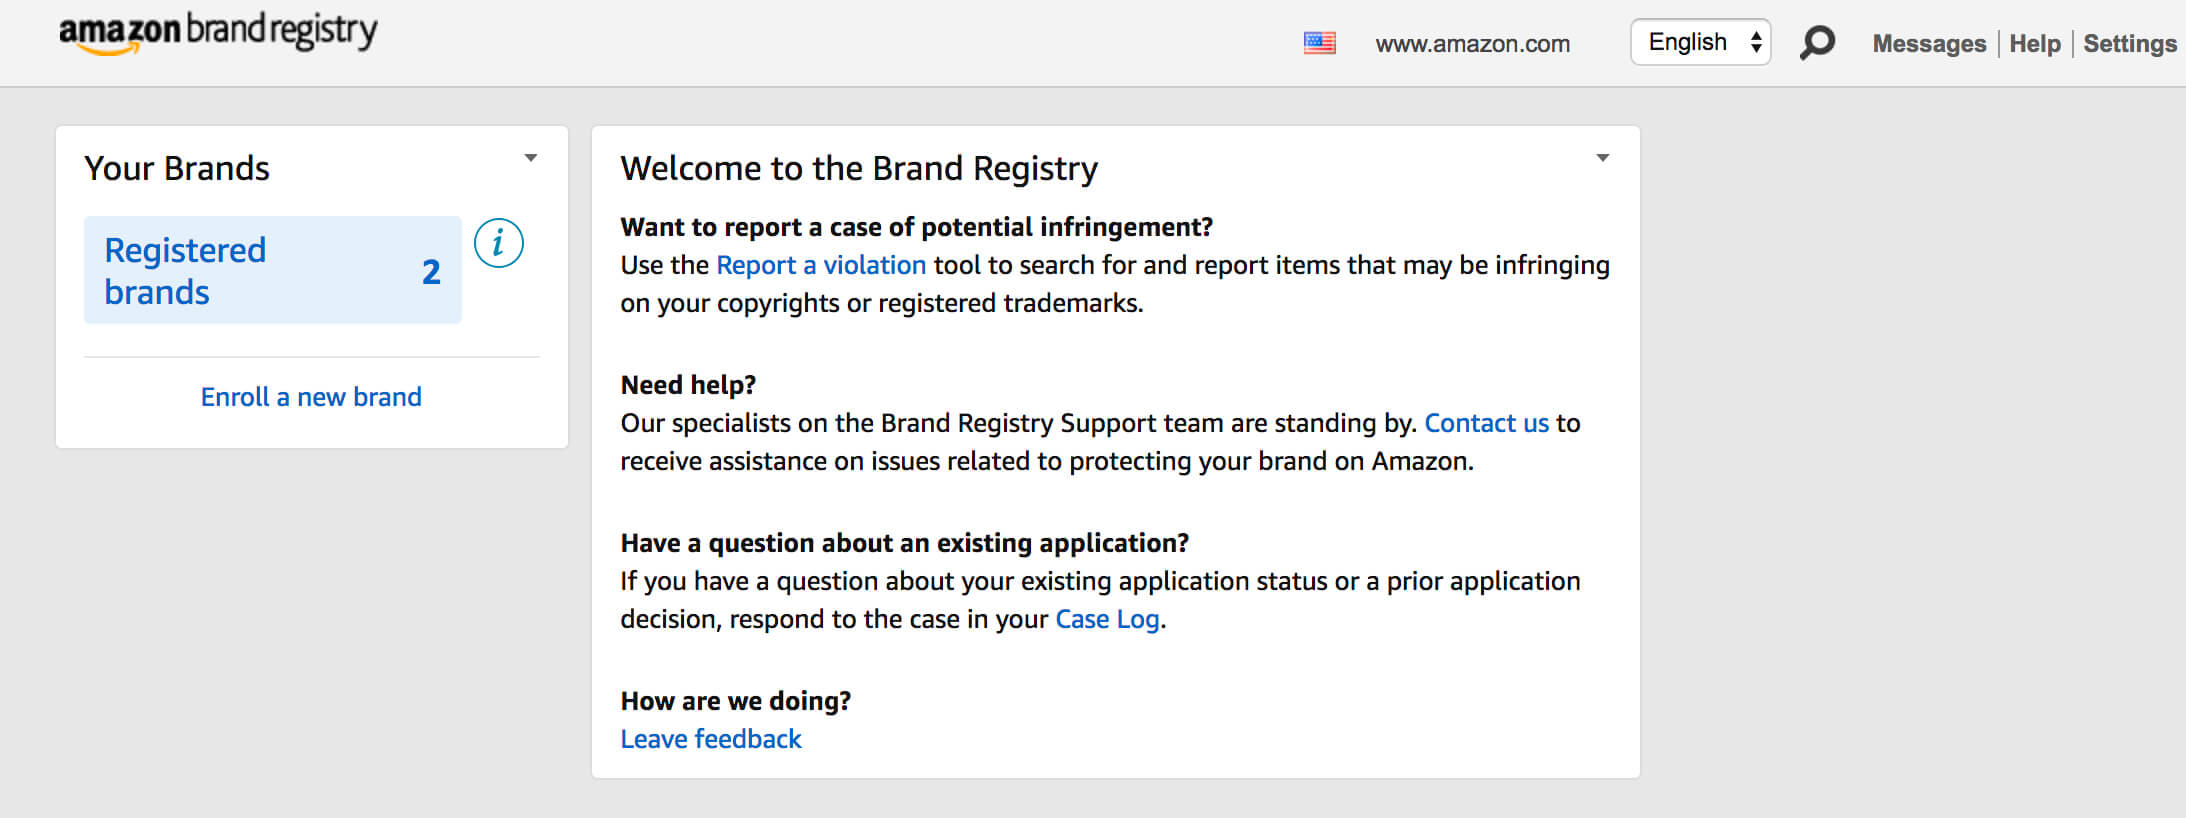 amazon brand registry authorization form